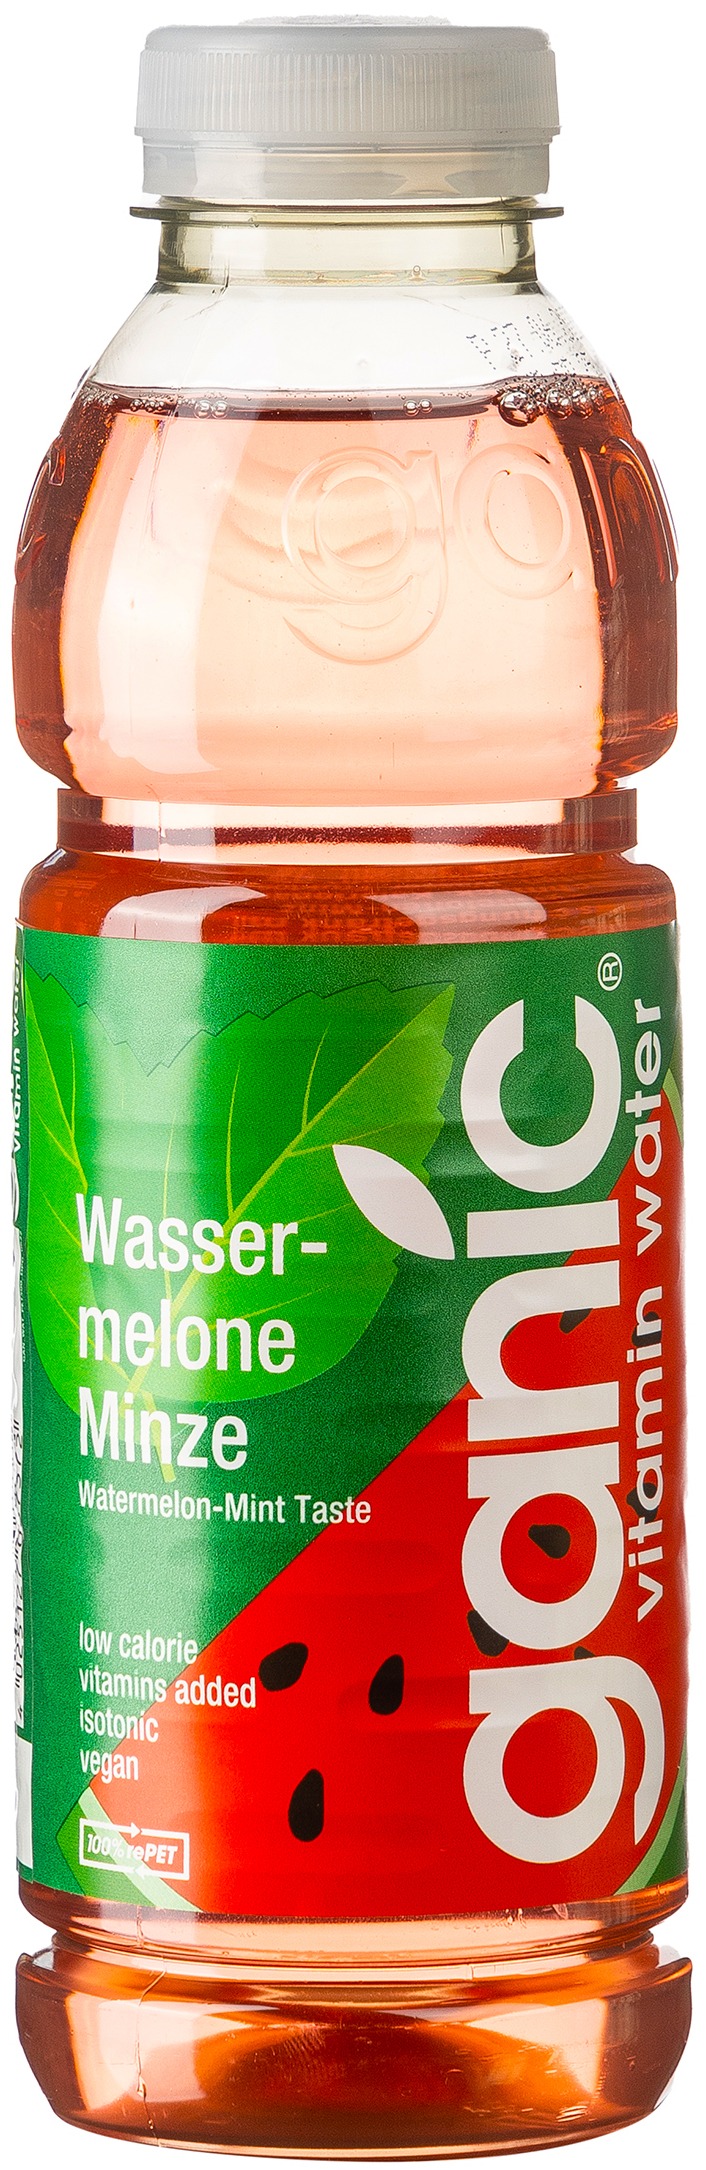 Ganic Vitamin Water Wassermelone Minze 0,5L EINWEG